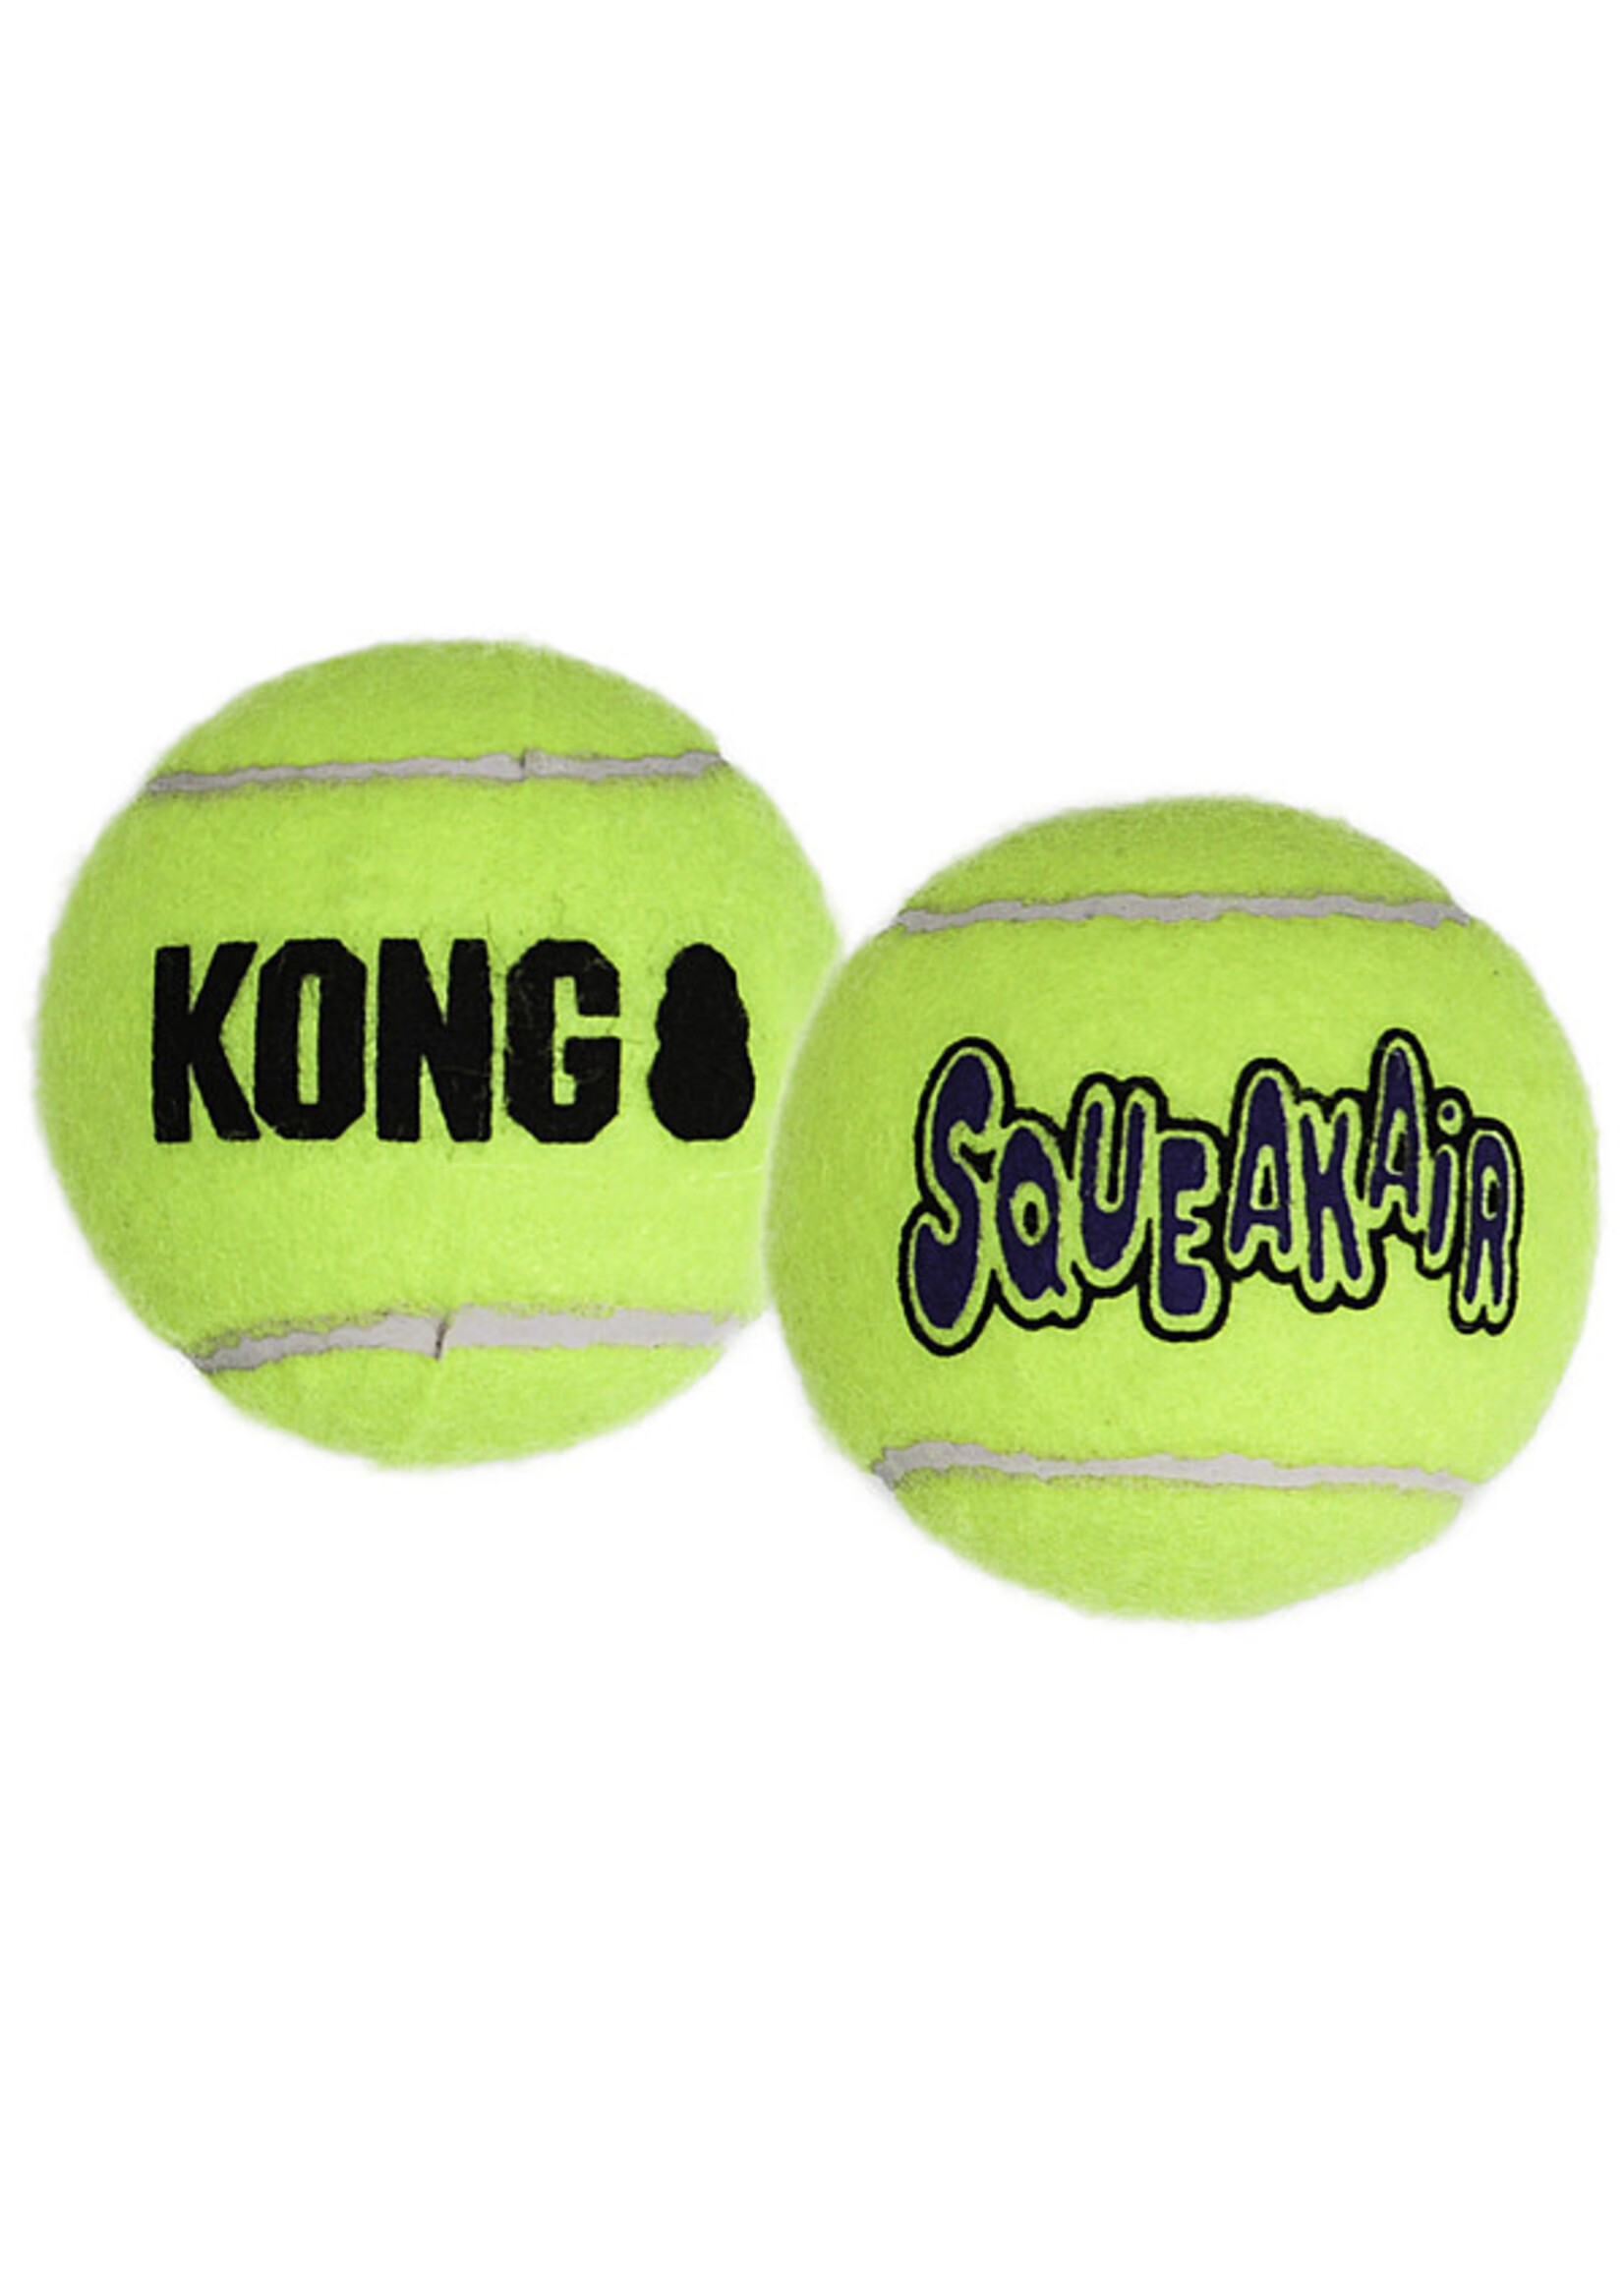 Kong AirDog Squeaker Tennis Ball